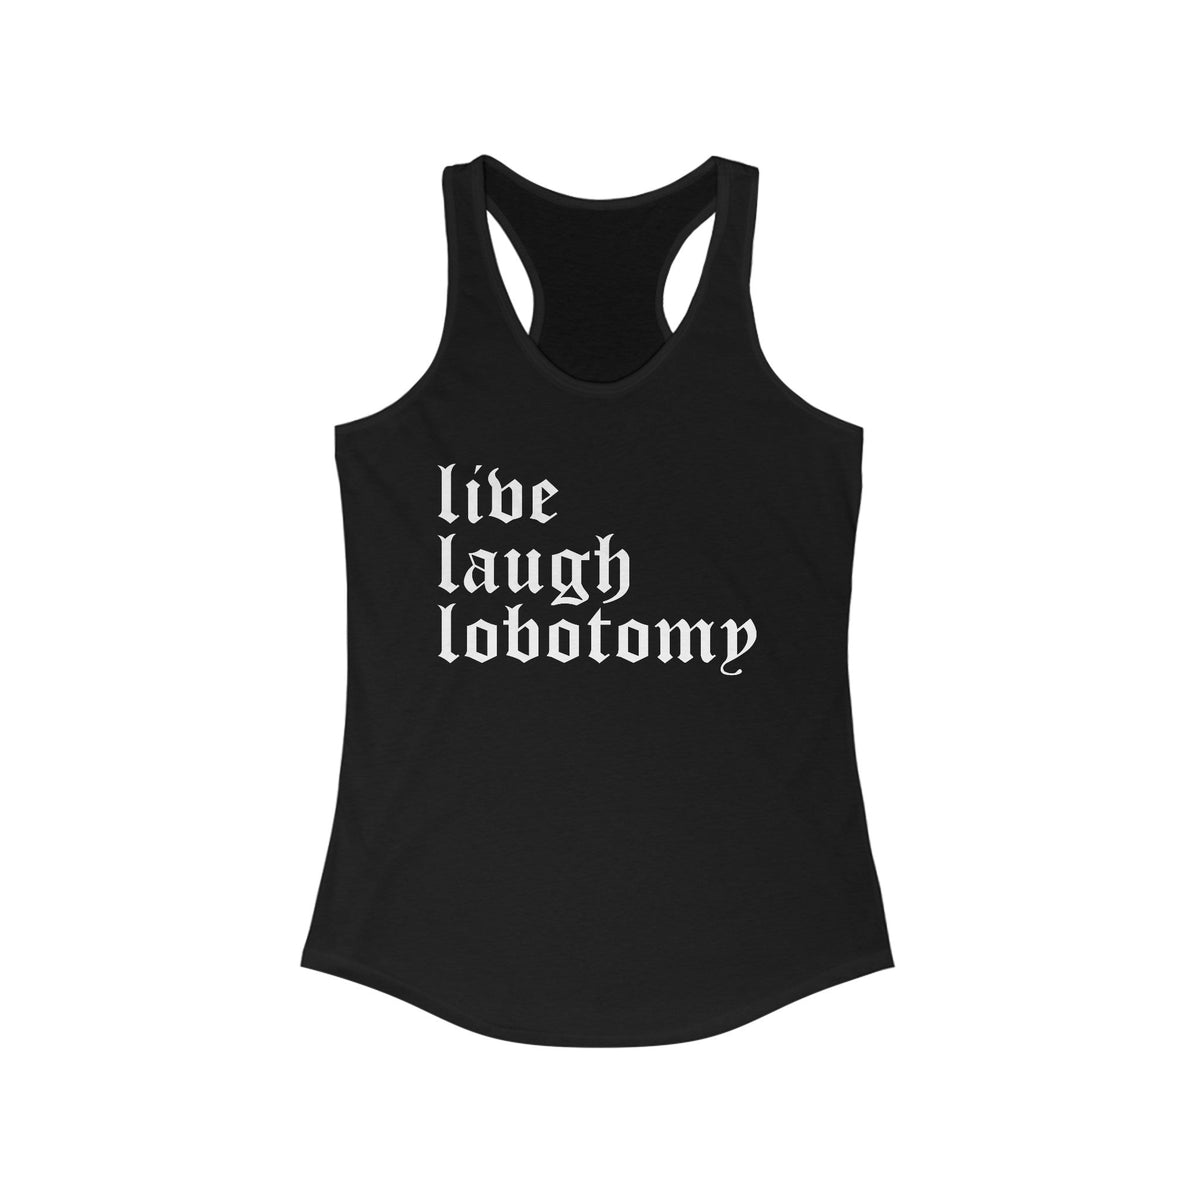 Live Laugh Lobotomy Women's Racerback Tank (READY TO SHIP) - Goth Cloth Co.20923445789992698000